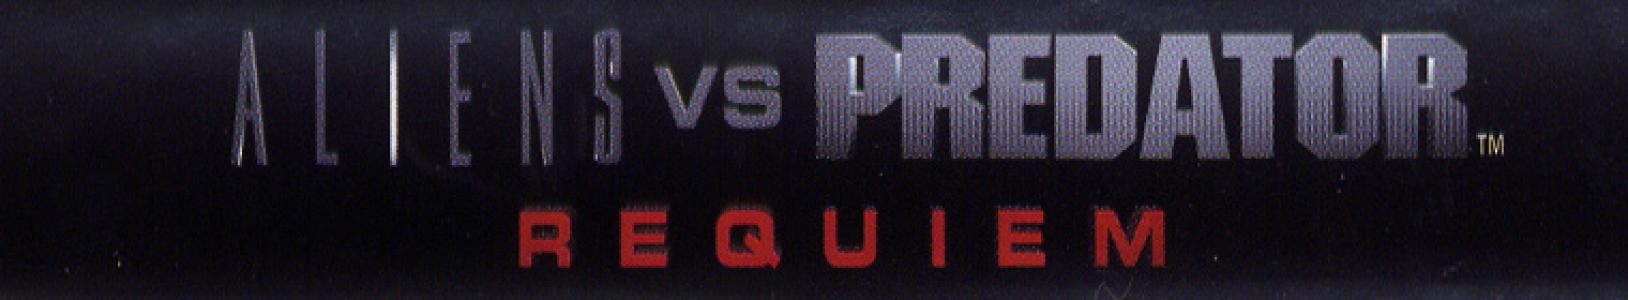 Aliens vs. Predator: Requiem banner